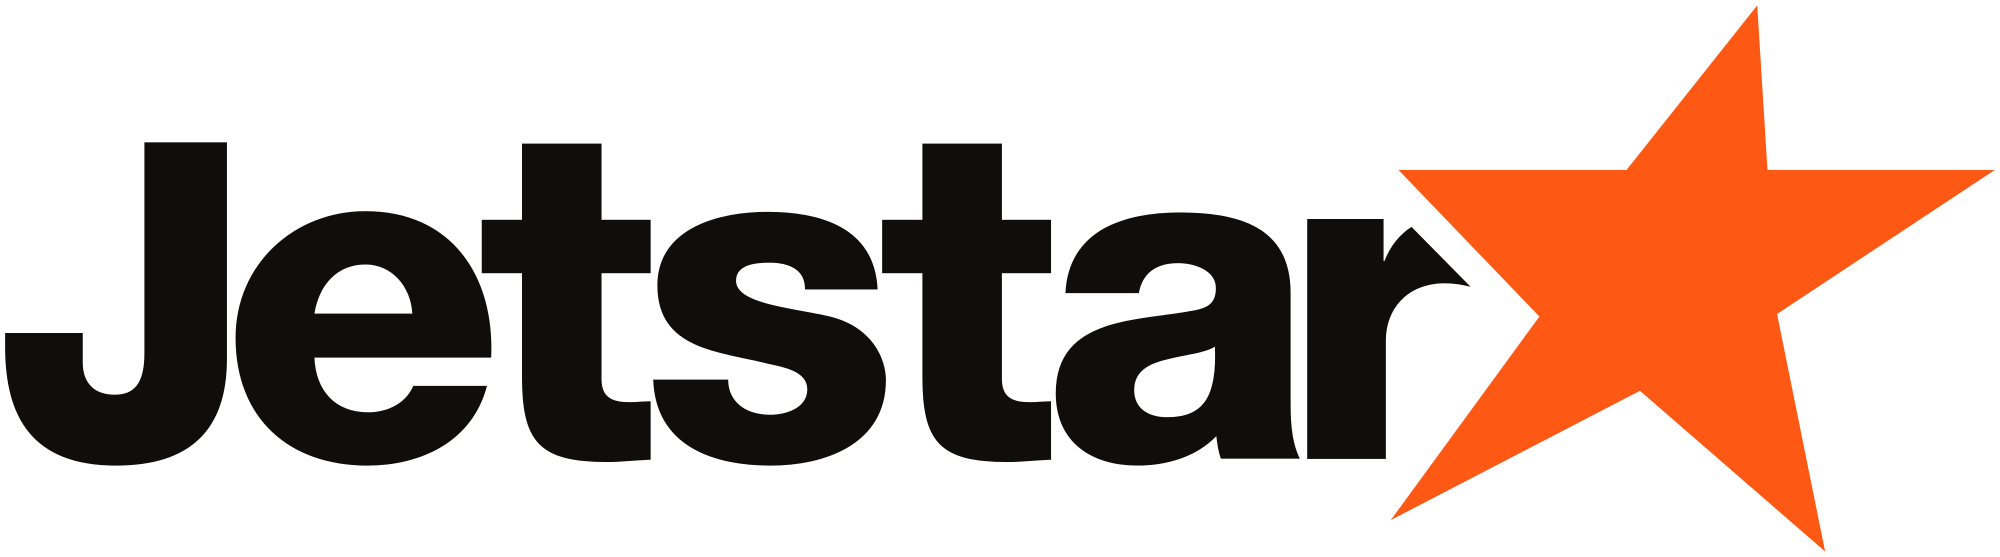 Jet Star Brand Logo